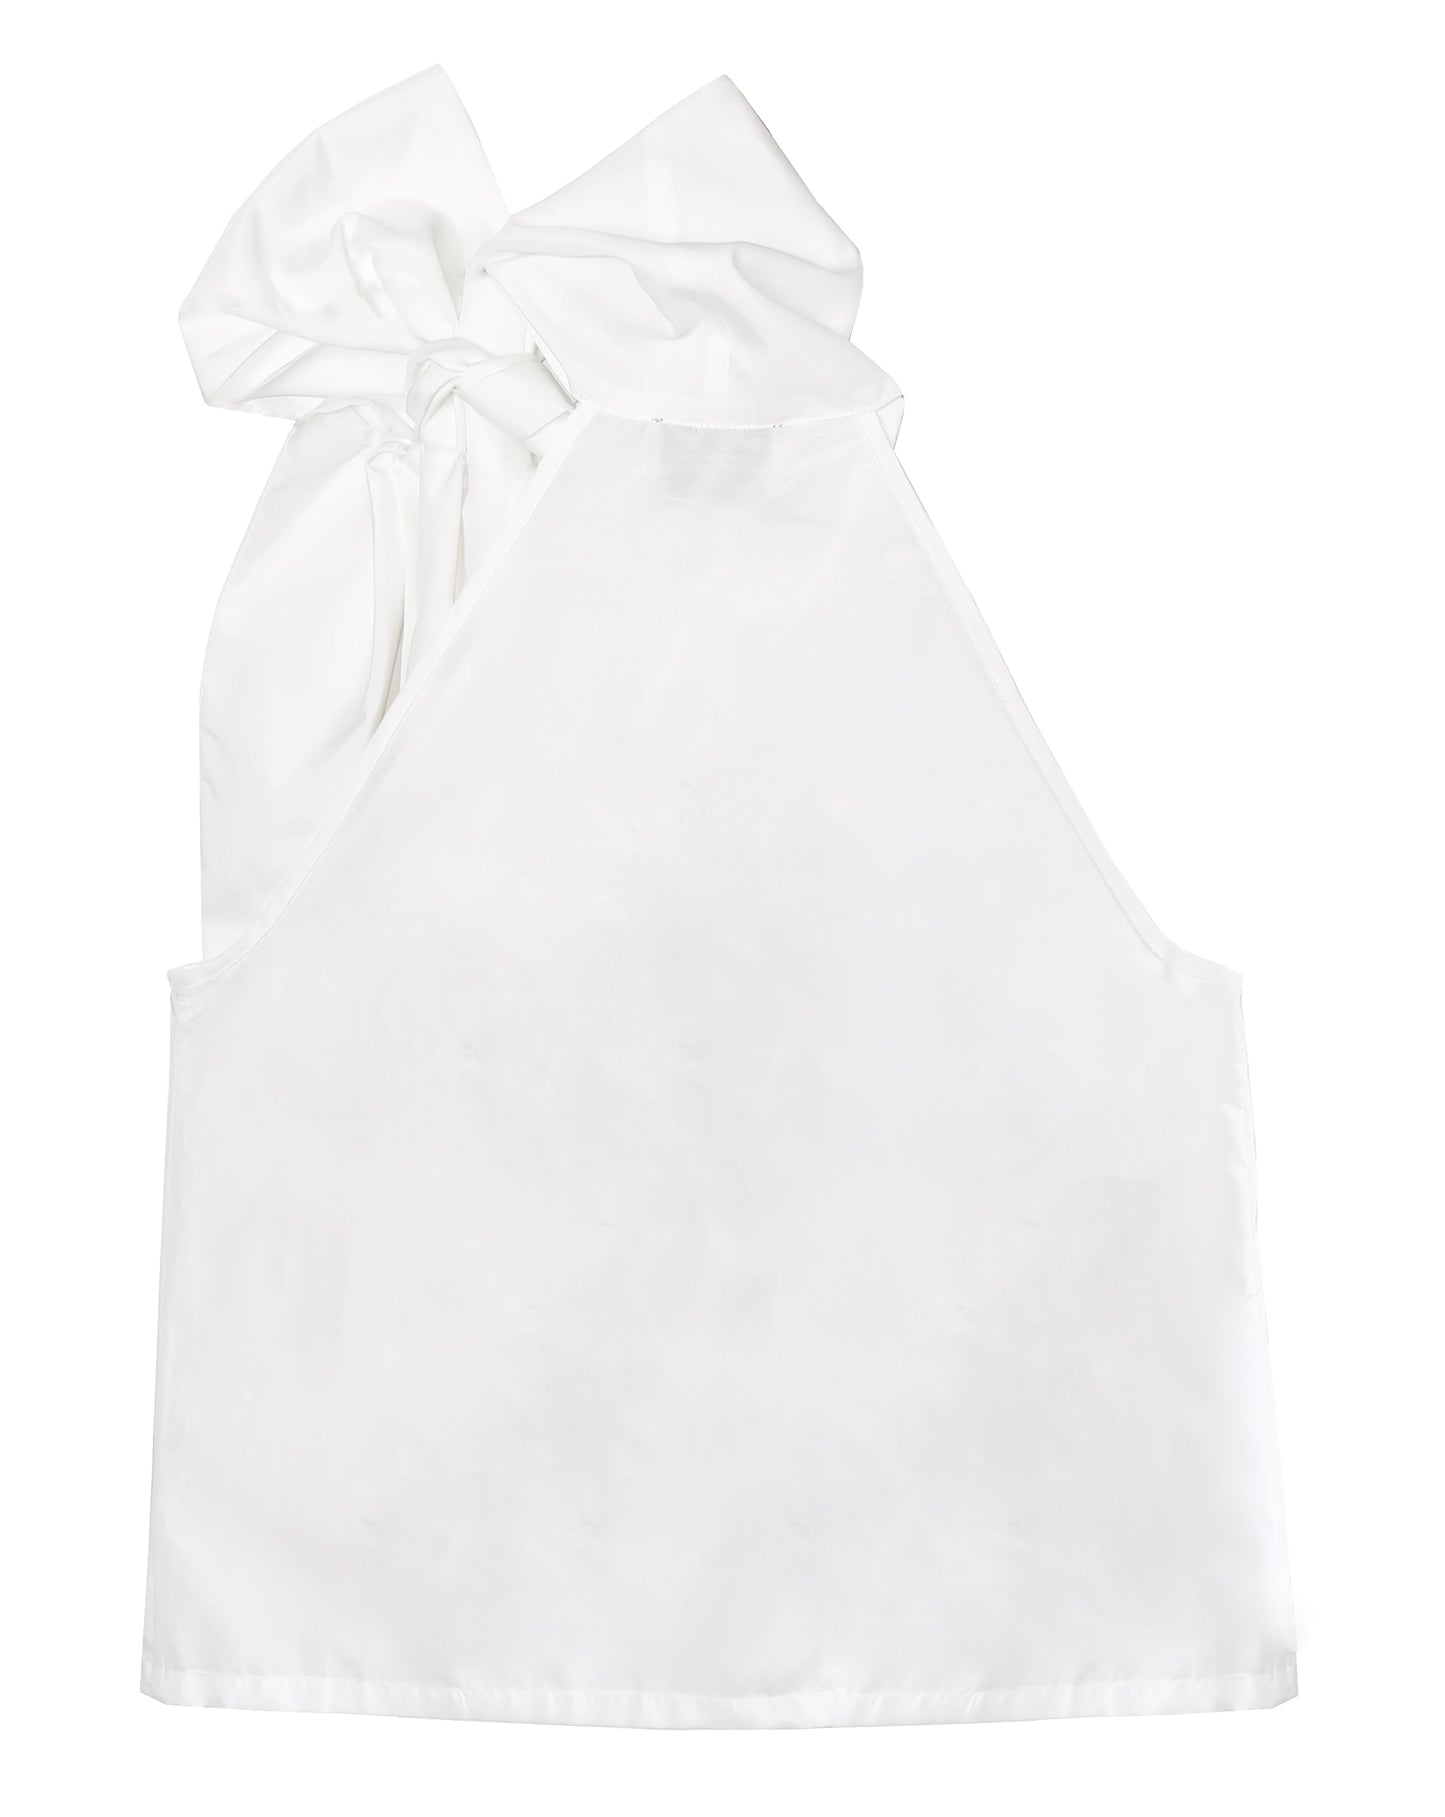 Maia Tie Top - White Cotton/Silk